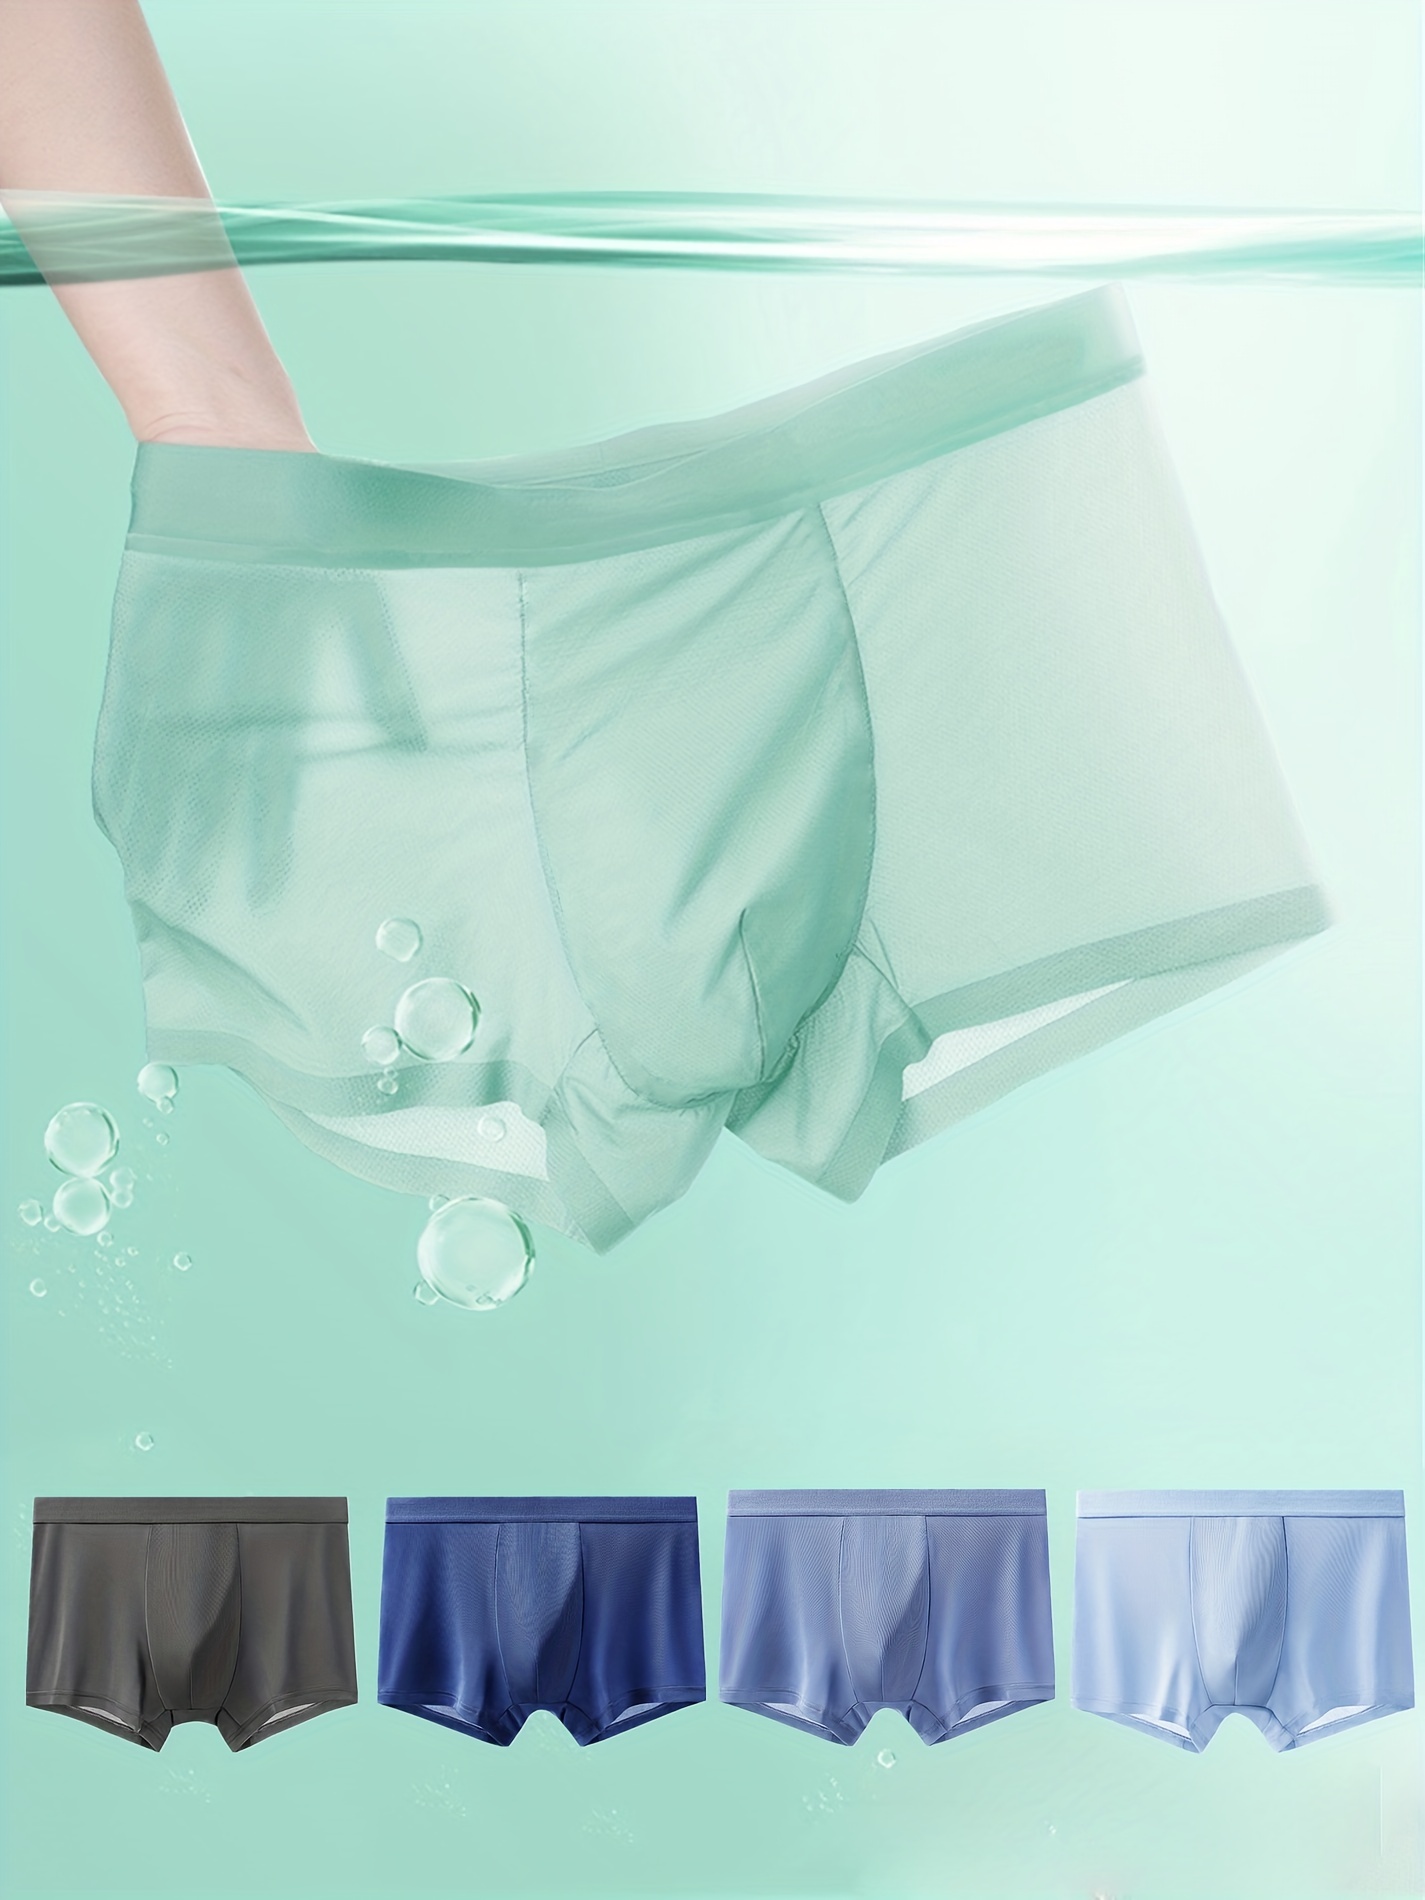 4 Pack Men's Support Pouch Traceless Ice Silk Underwear